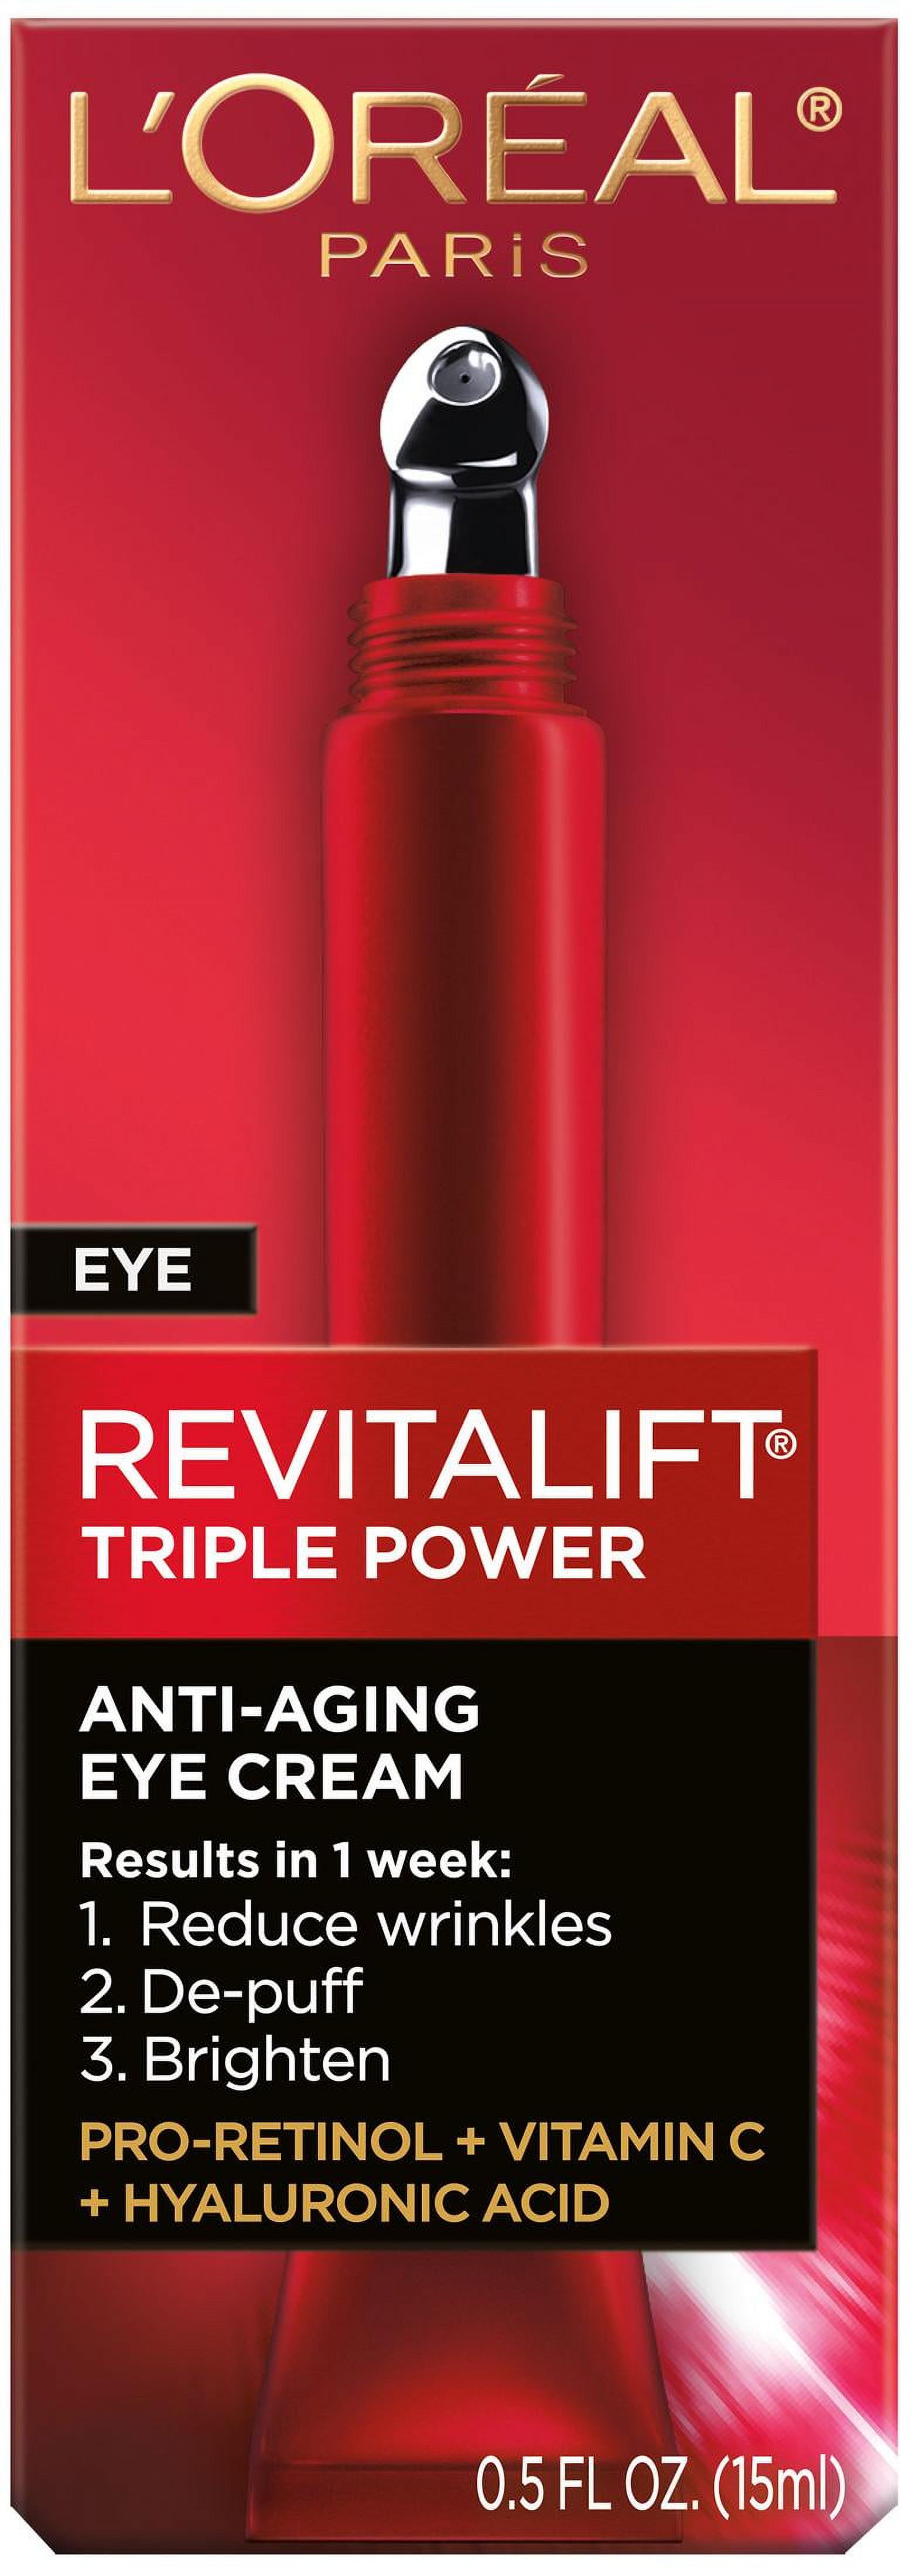 L'Oreal Paris Revitalift Anti Aging Eye Cream 0.5 fl oz - image 3 of 8